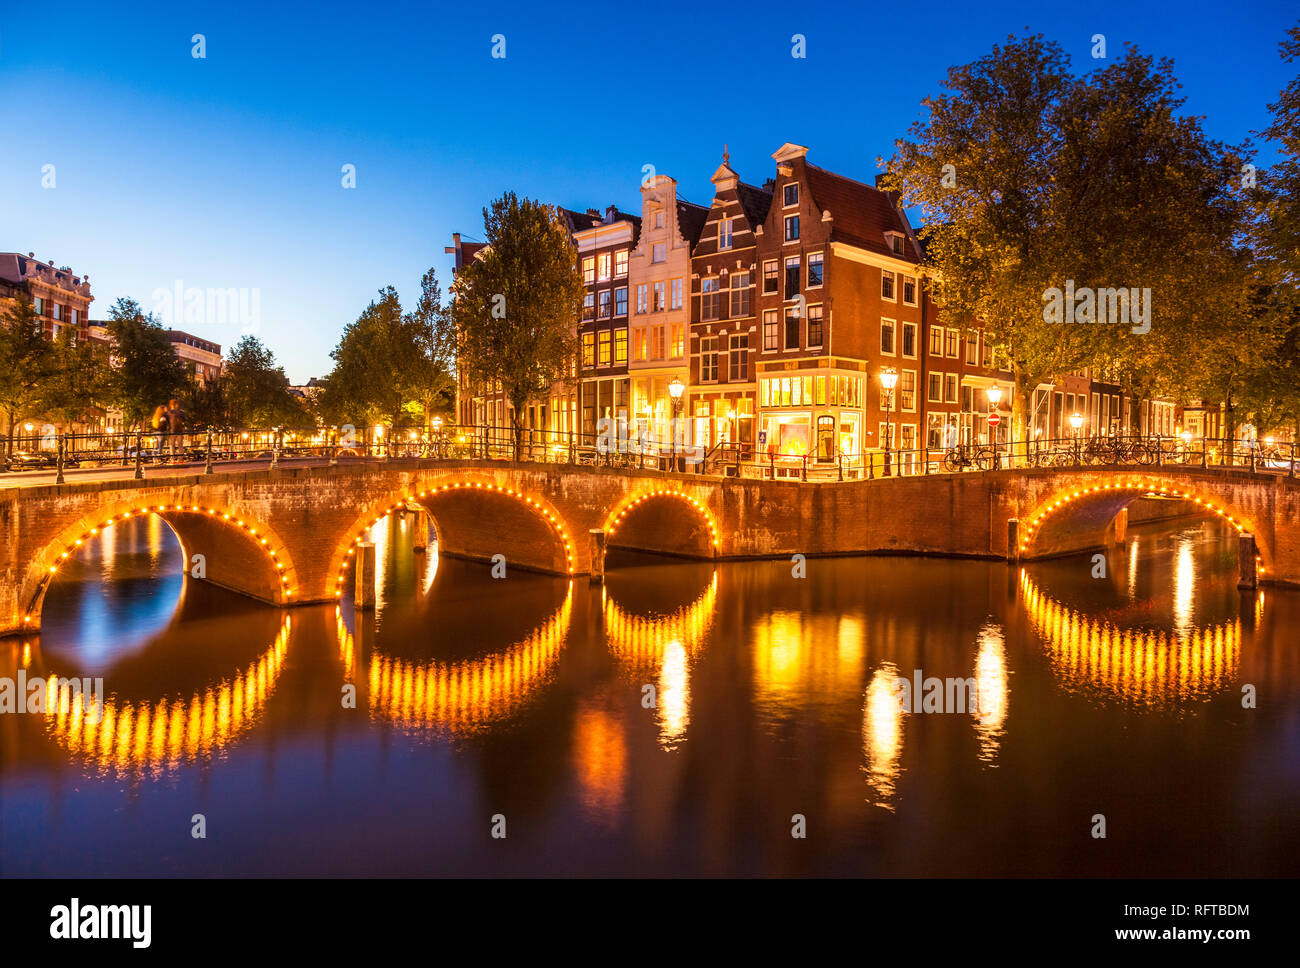 Ponti illuminati e riflessi di notte, e Keizergracht Leilesgracht canali, Amsterdam, Olanda Settentrionale, Paesi Bassi, Europa Foto Stock